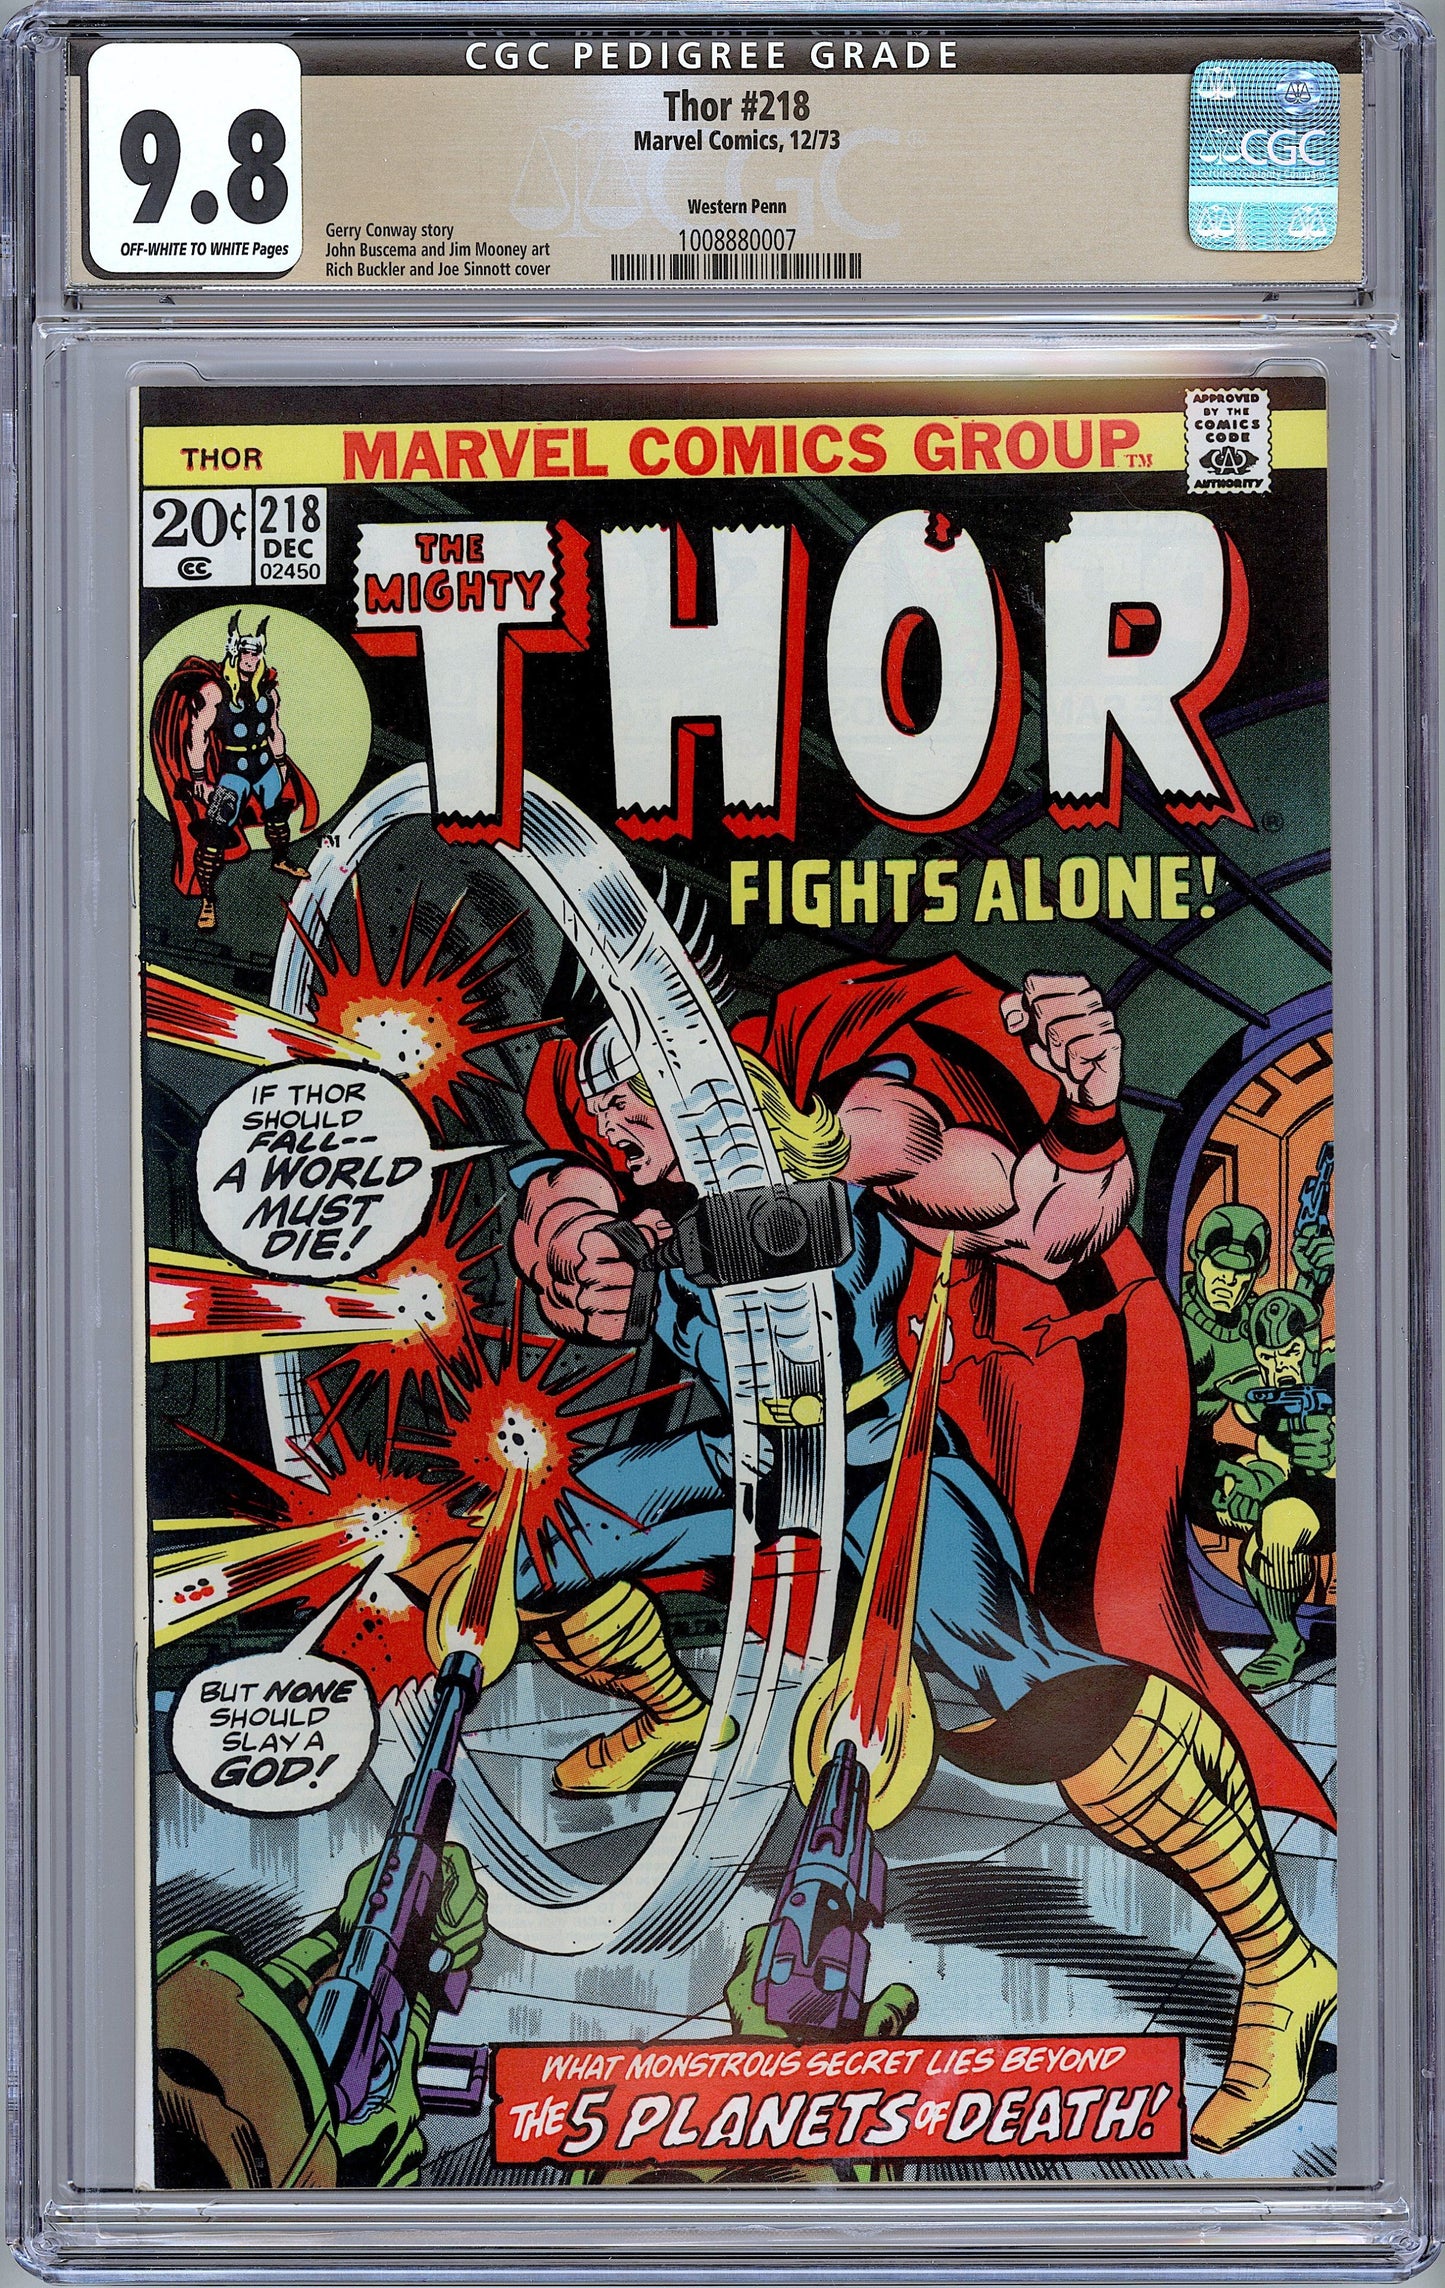 Thor #218. Western Penn Pedigree. 1973 Marvel.  CGC 9.8